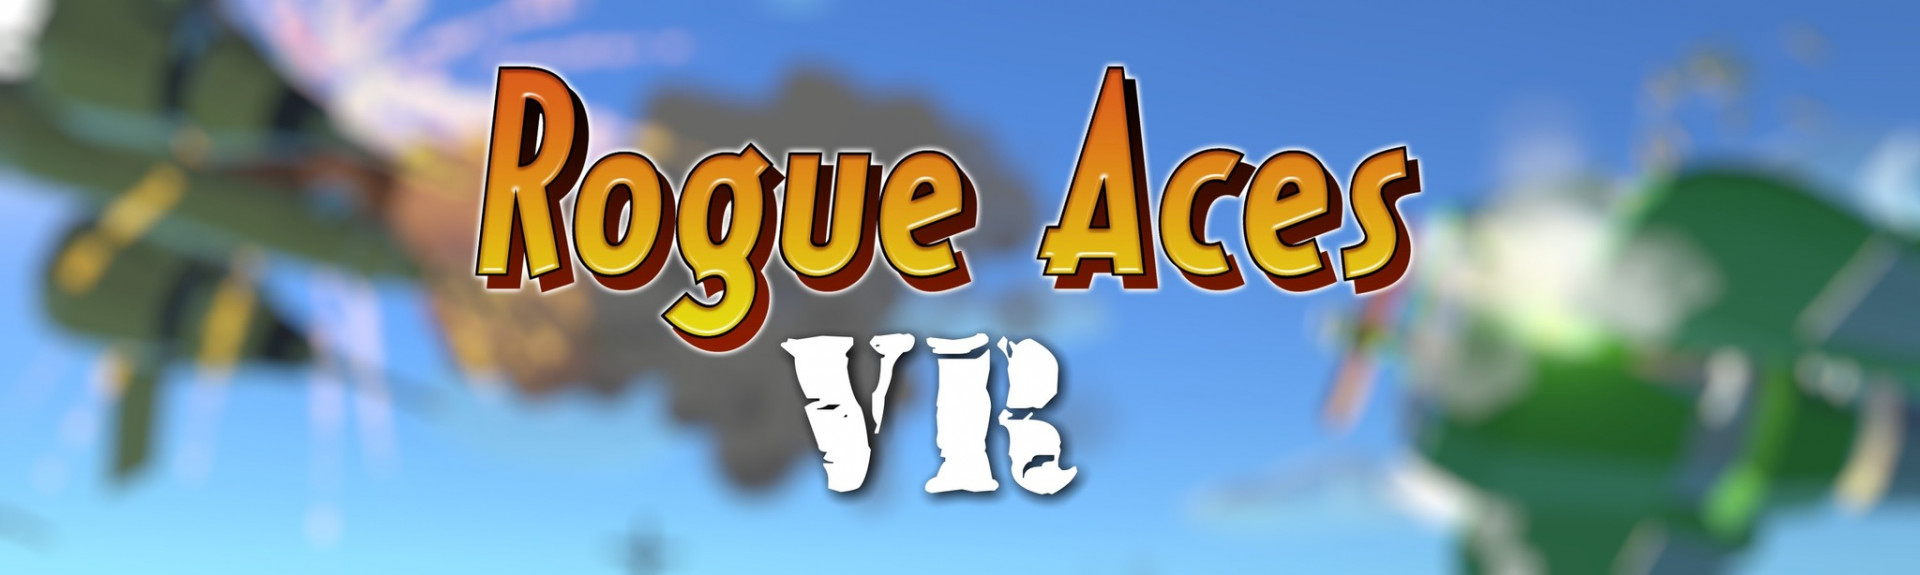 Rogue Aces VR